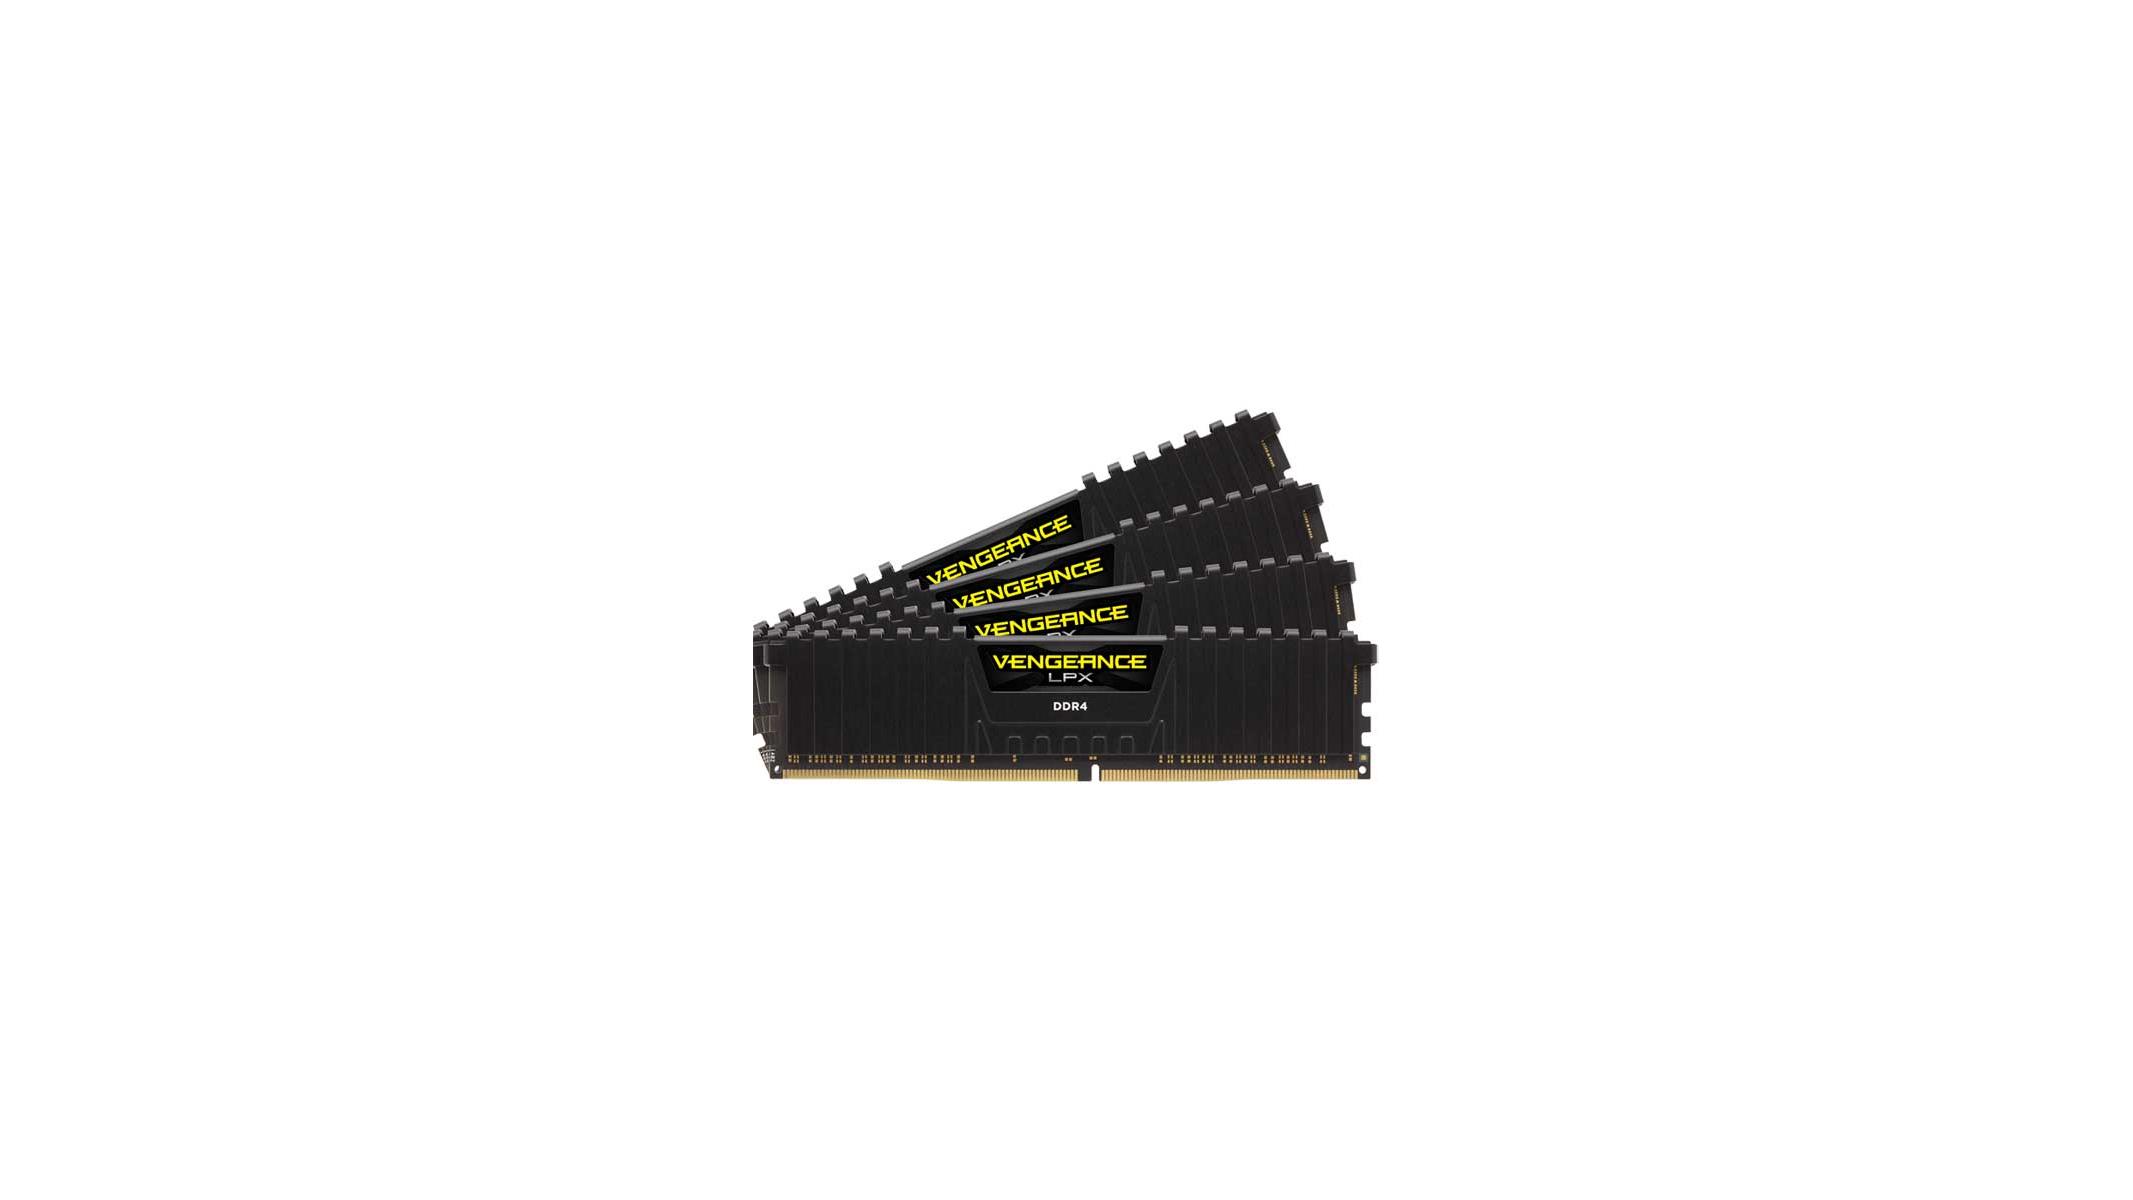 Corsair Vengeance LPX DDR4 32GB Memory Kit Breaks Speed Record At 